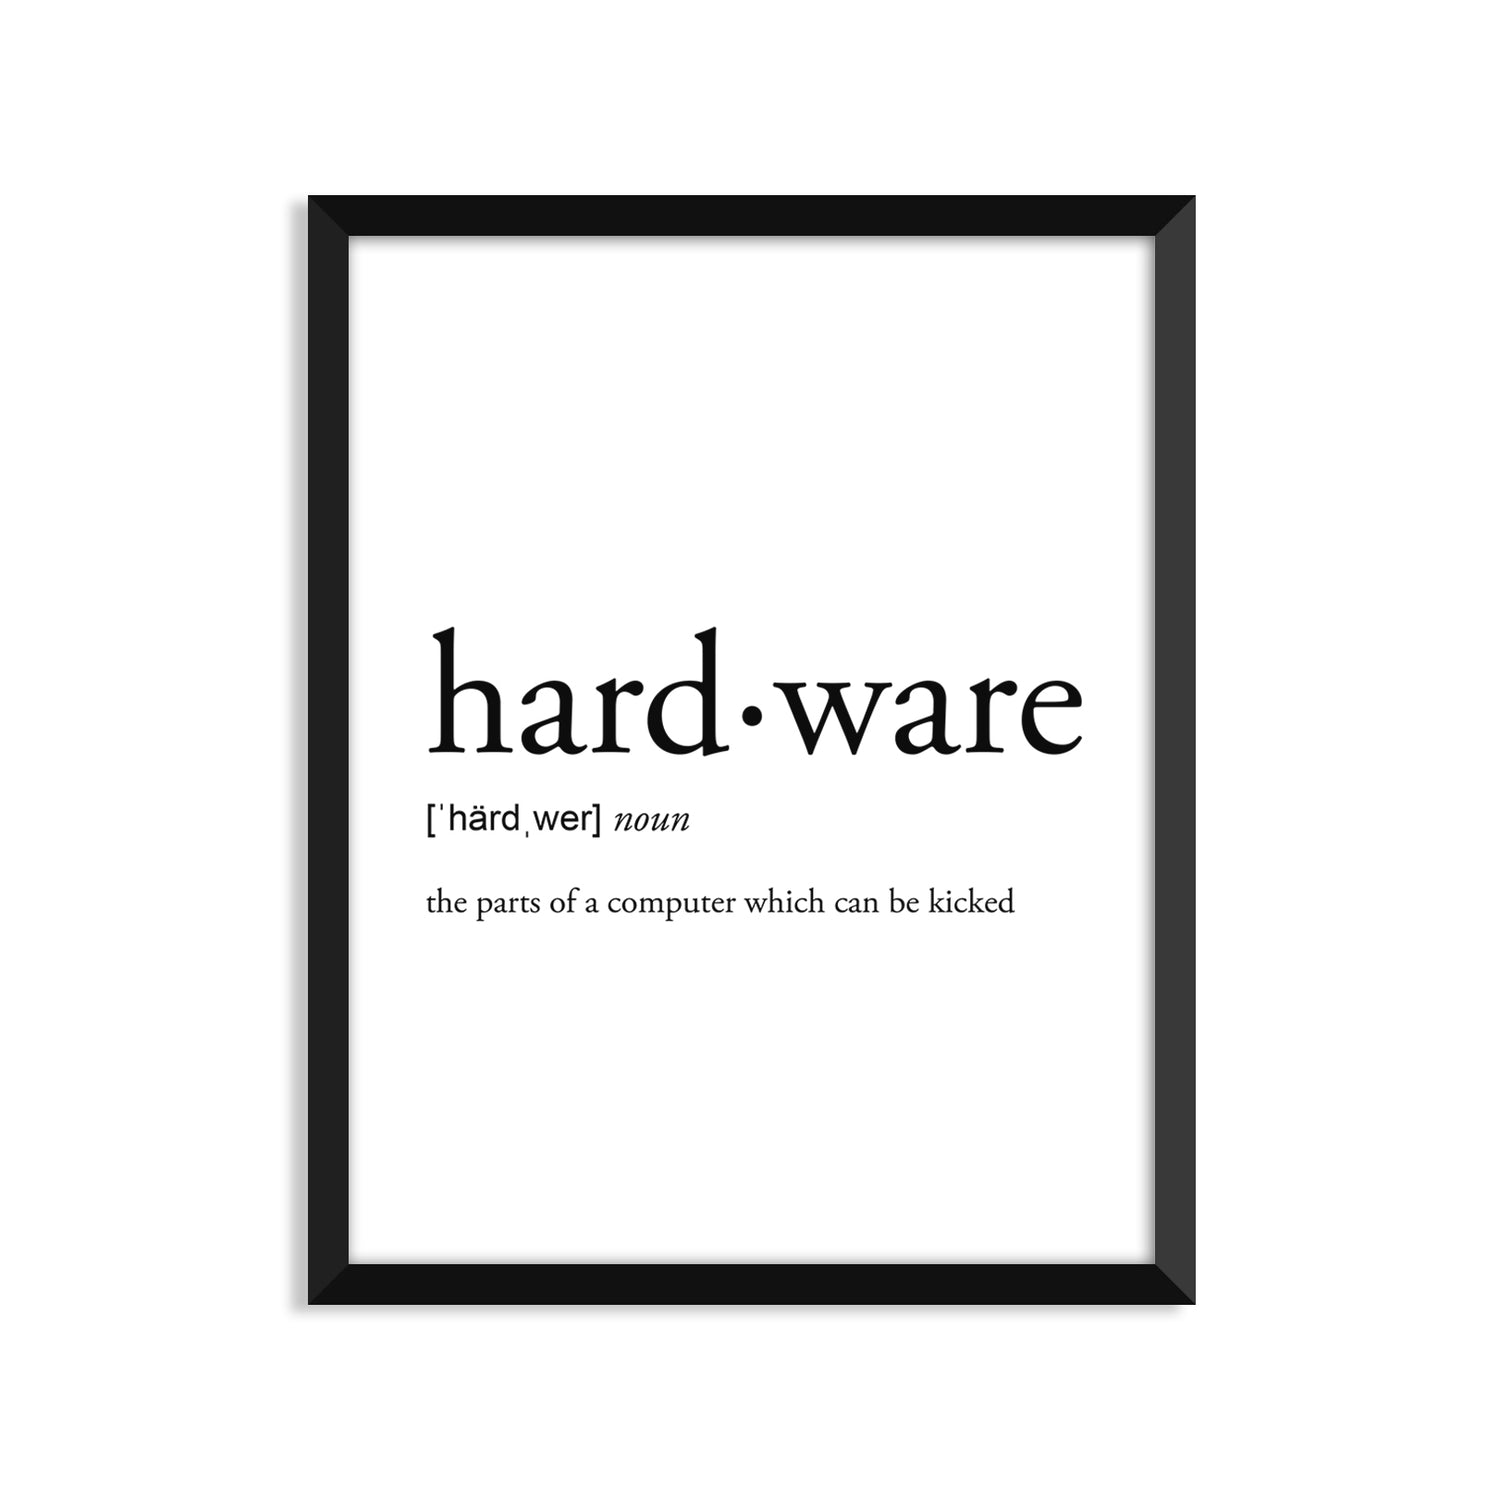 Hardware Definition - Unframed Art Print Or Greeting Card